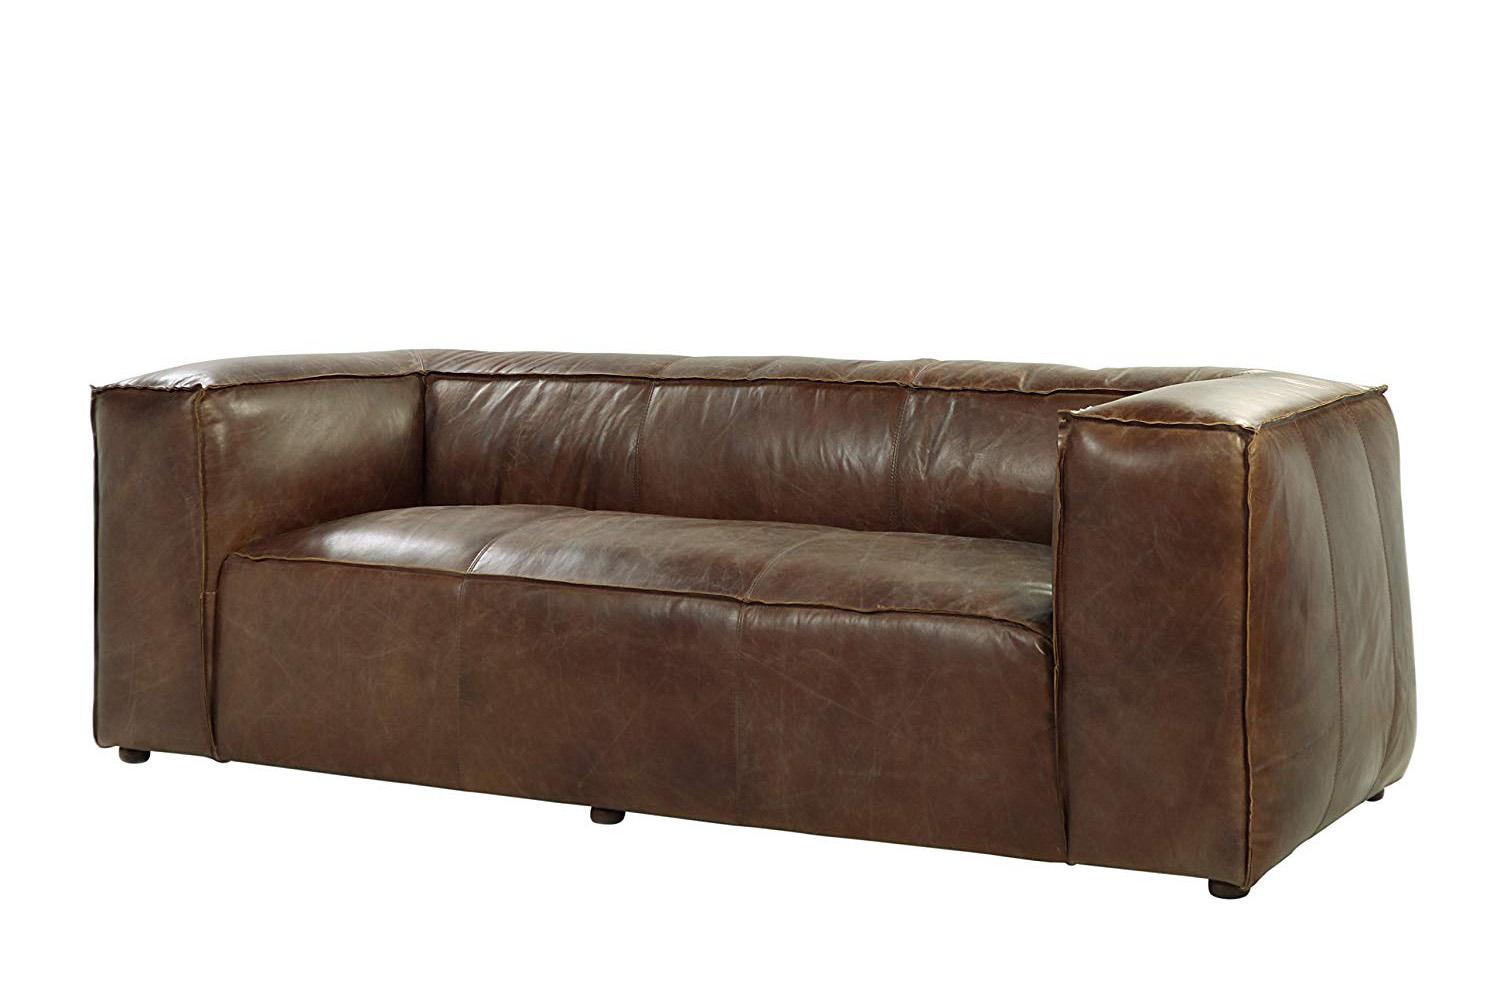 

    
Acme Furniture Brancaster-53545 - 53546 Sofa and Loveseat Set Brown 53545-2PC
